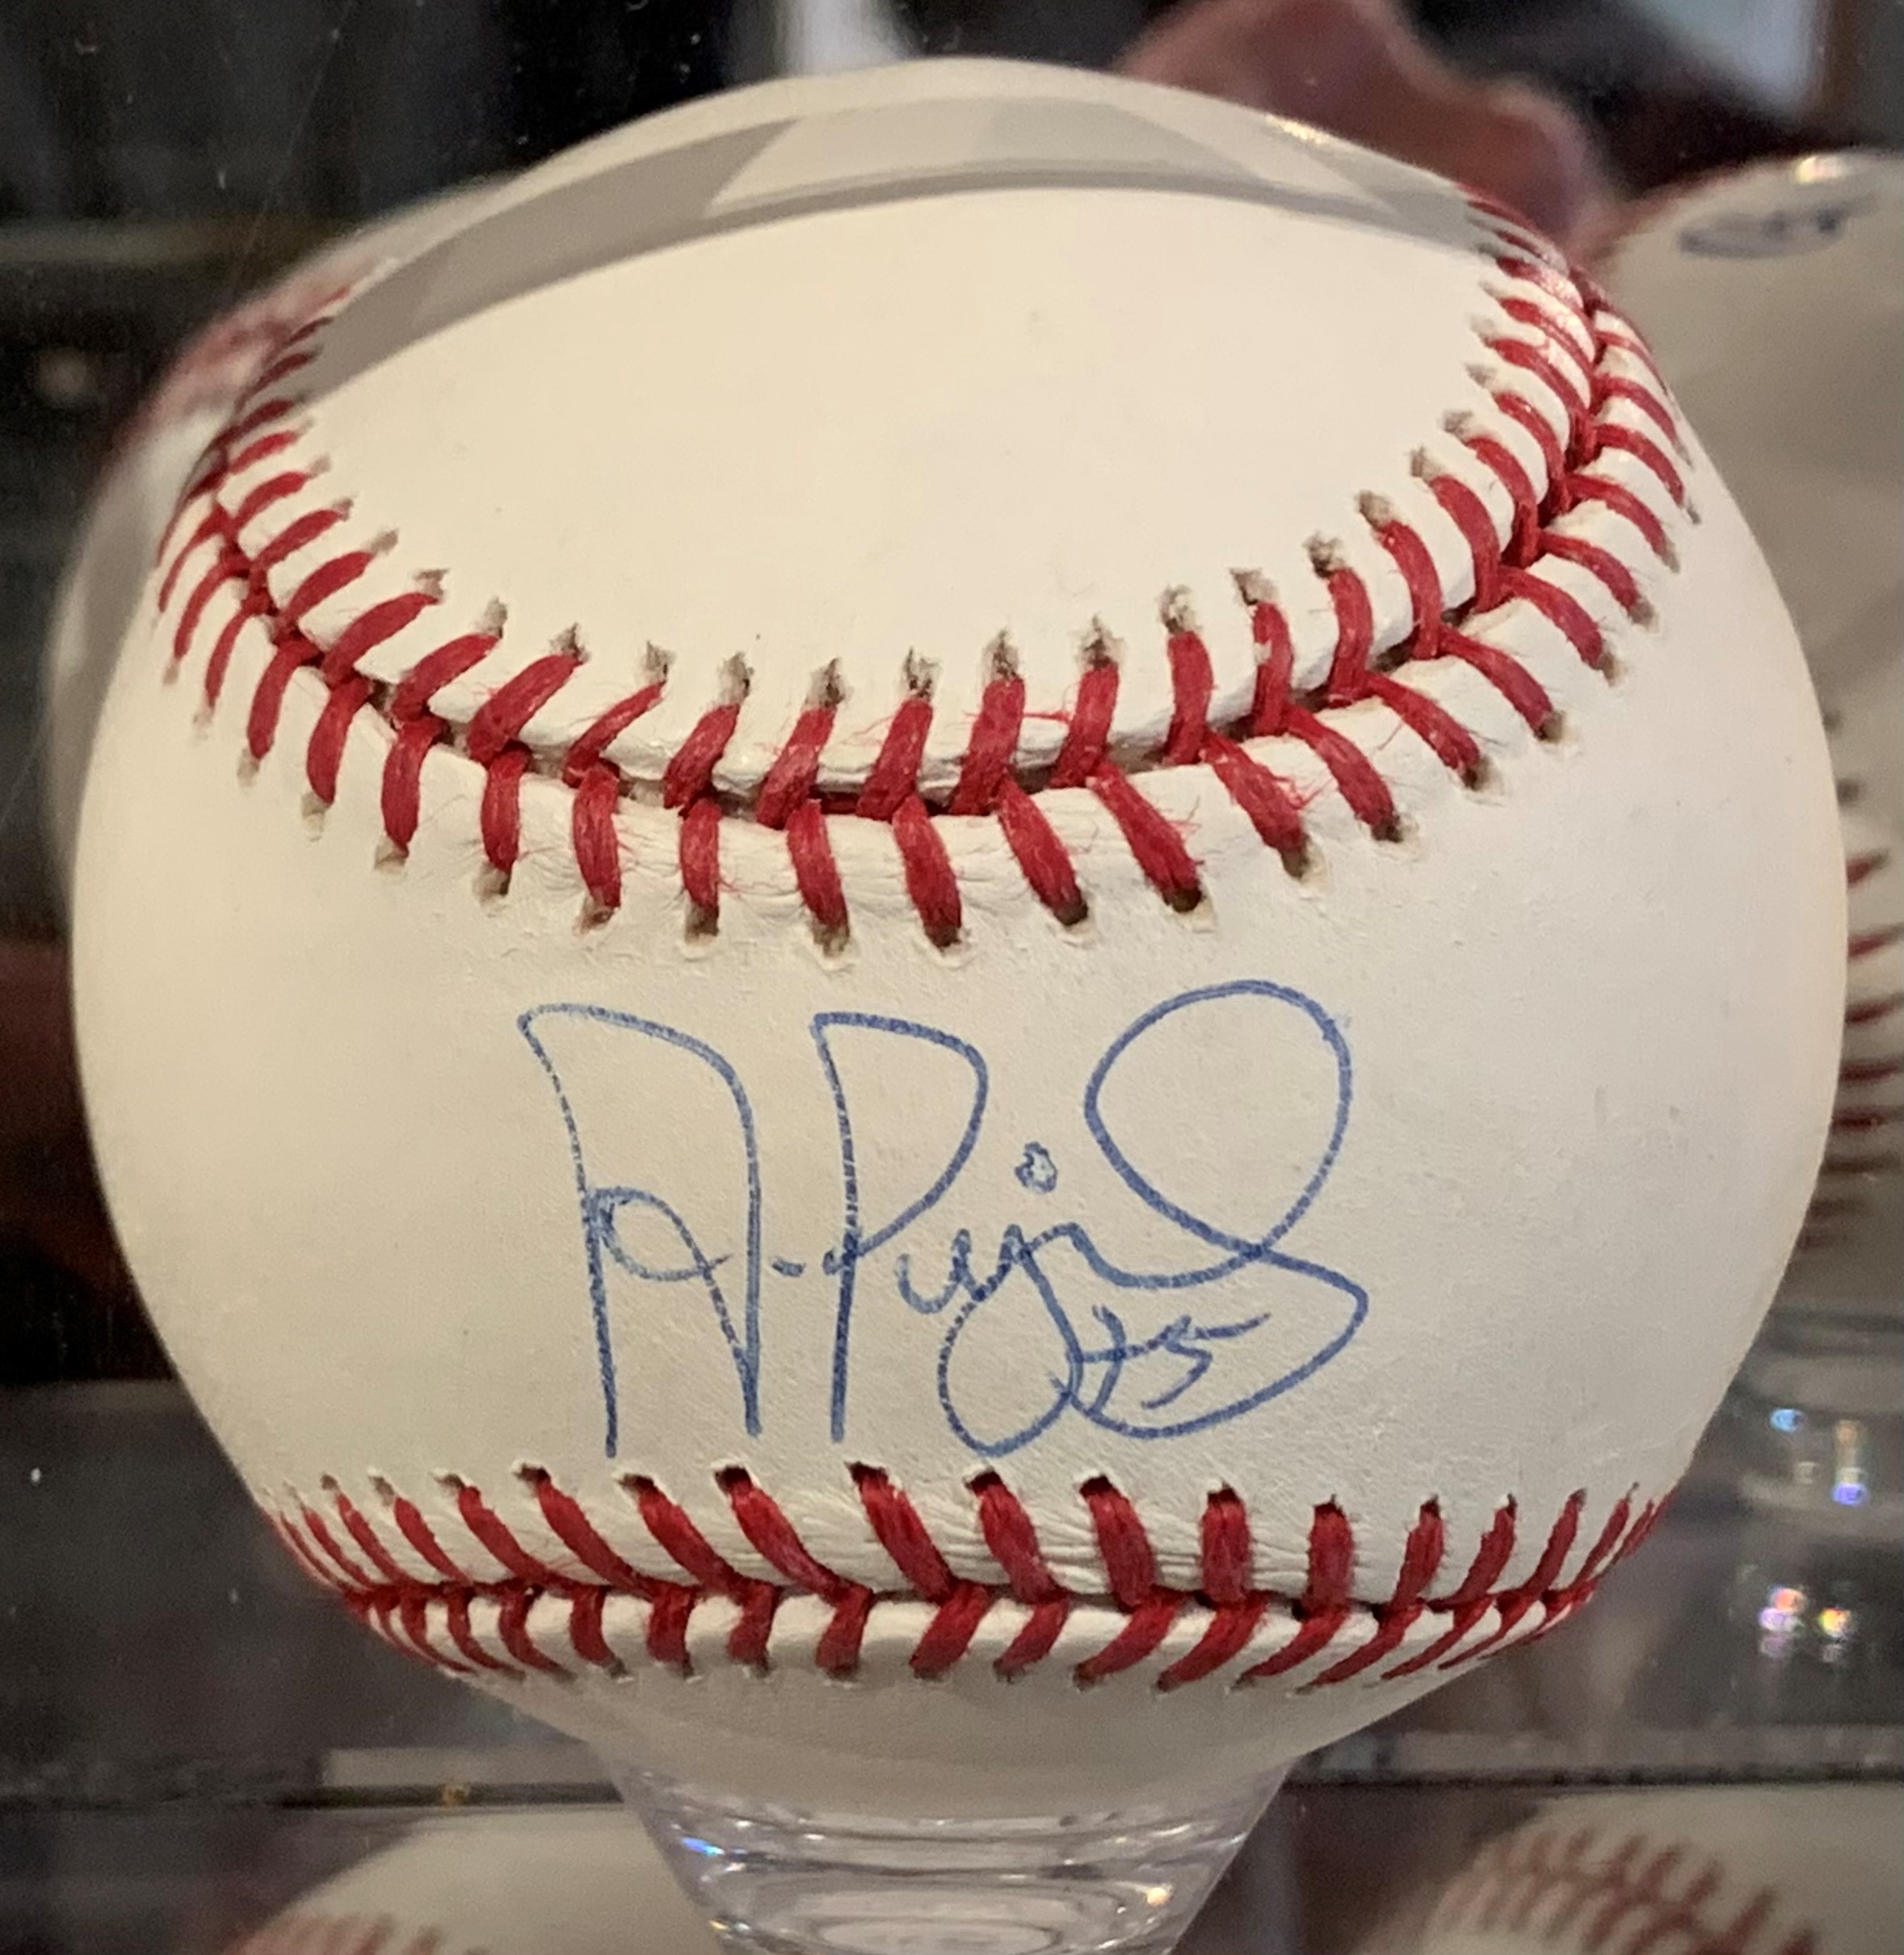 Albert Pujols Signed Baseball #1